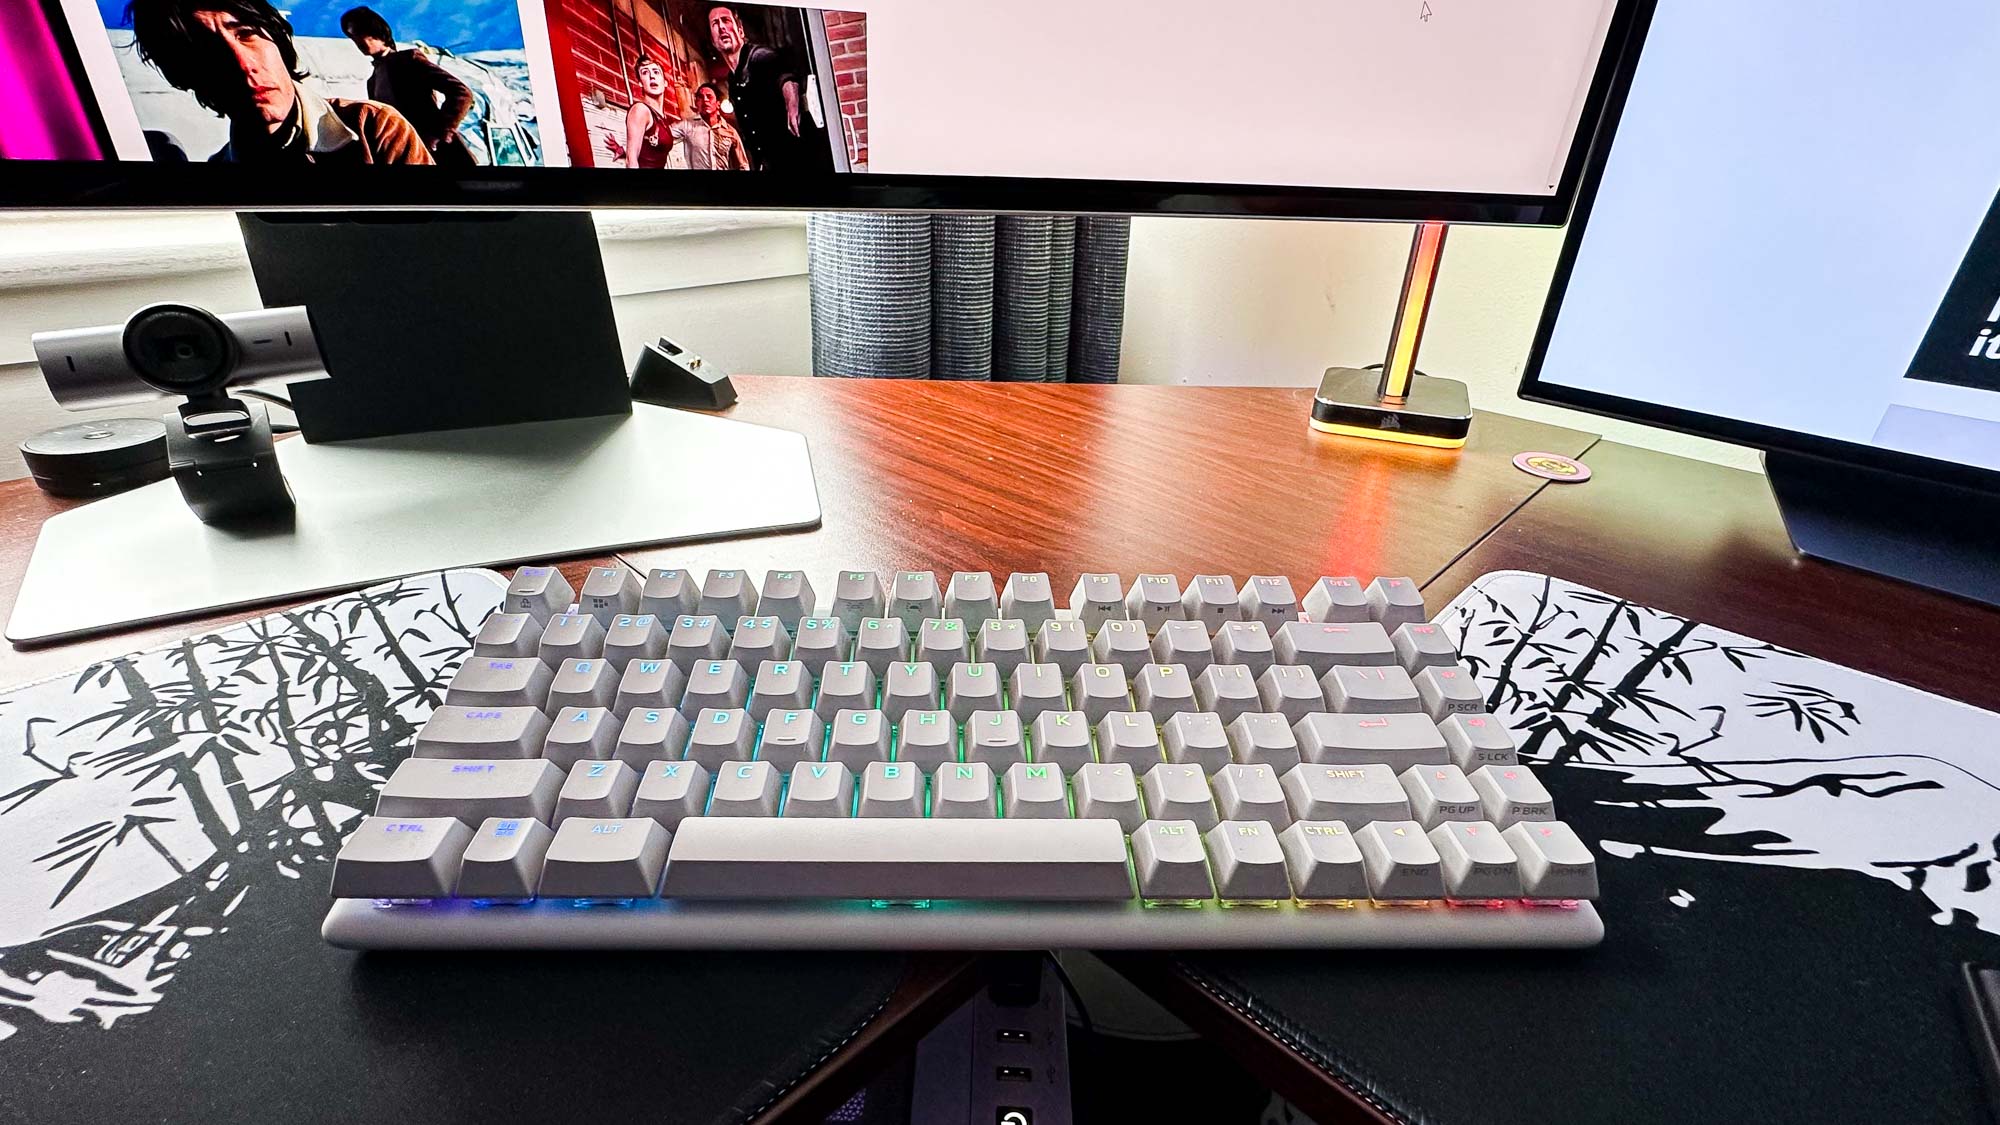 Alienware Pro Keyboard with RGB lighting on.